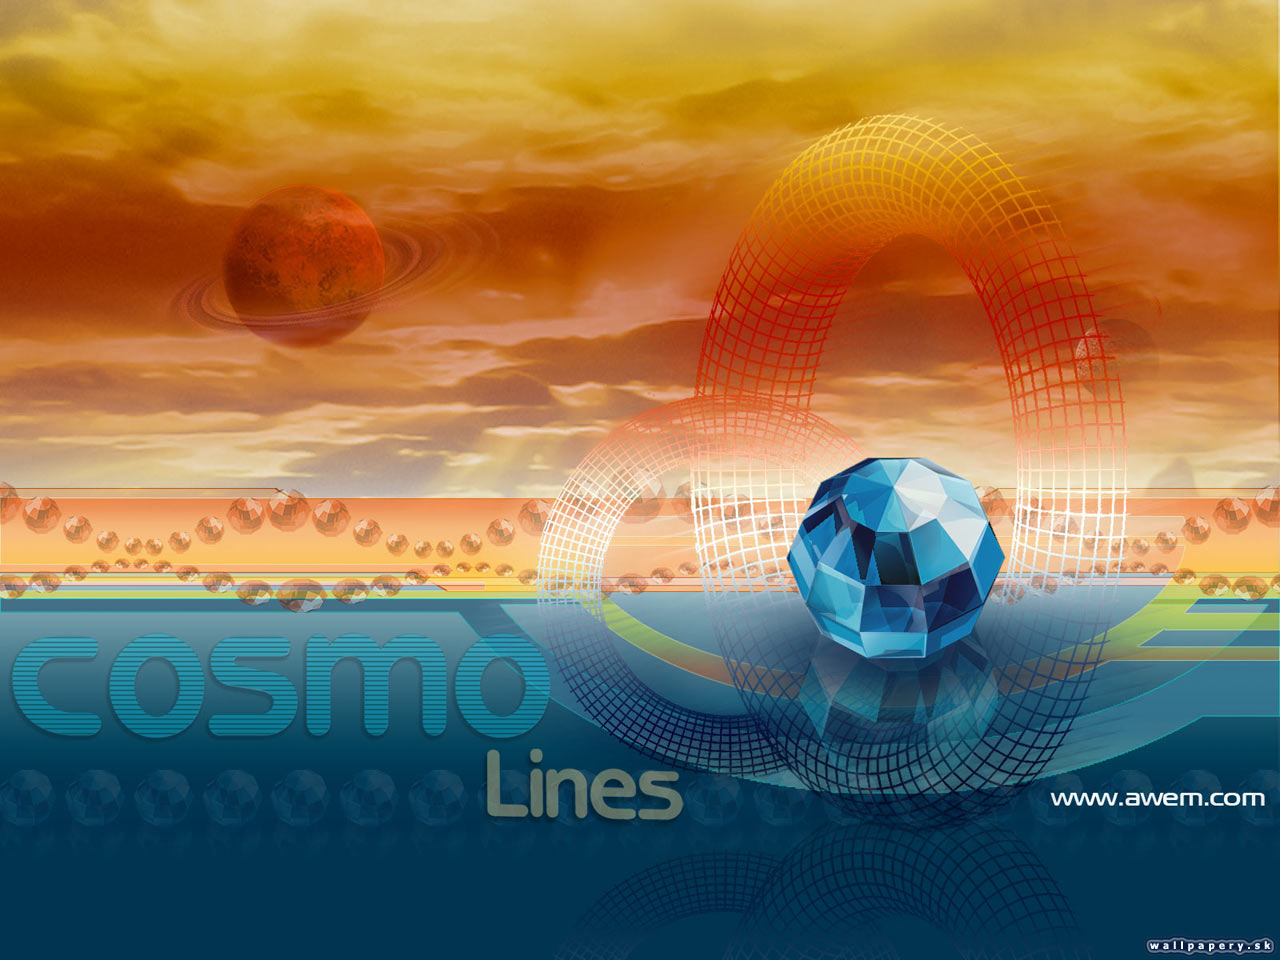 Cosmo Lines - wallpaper 1